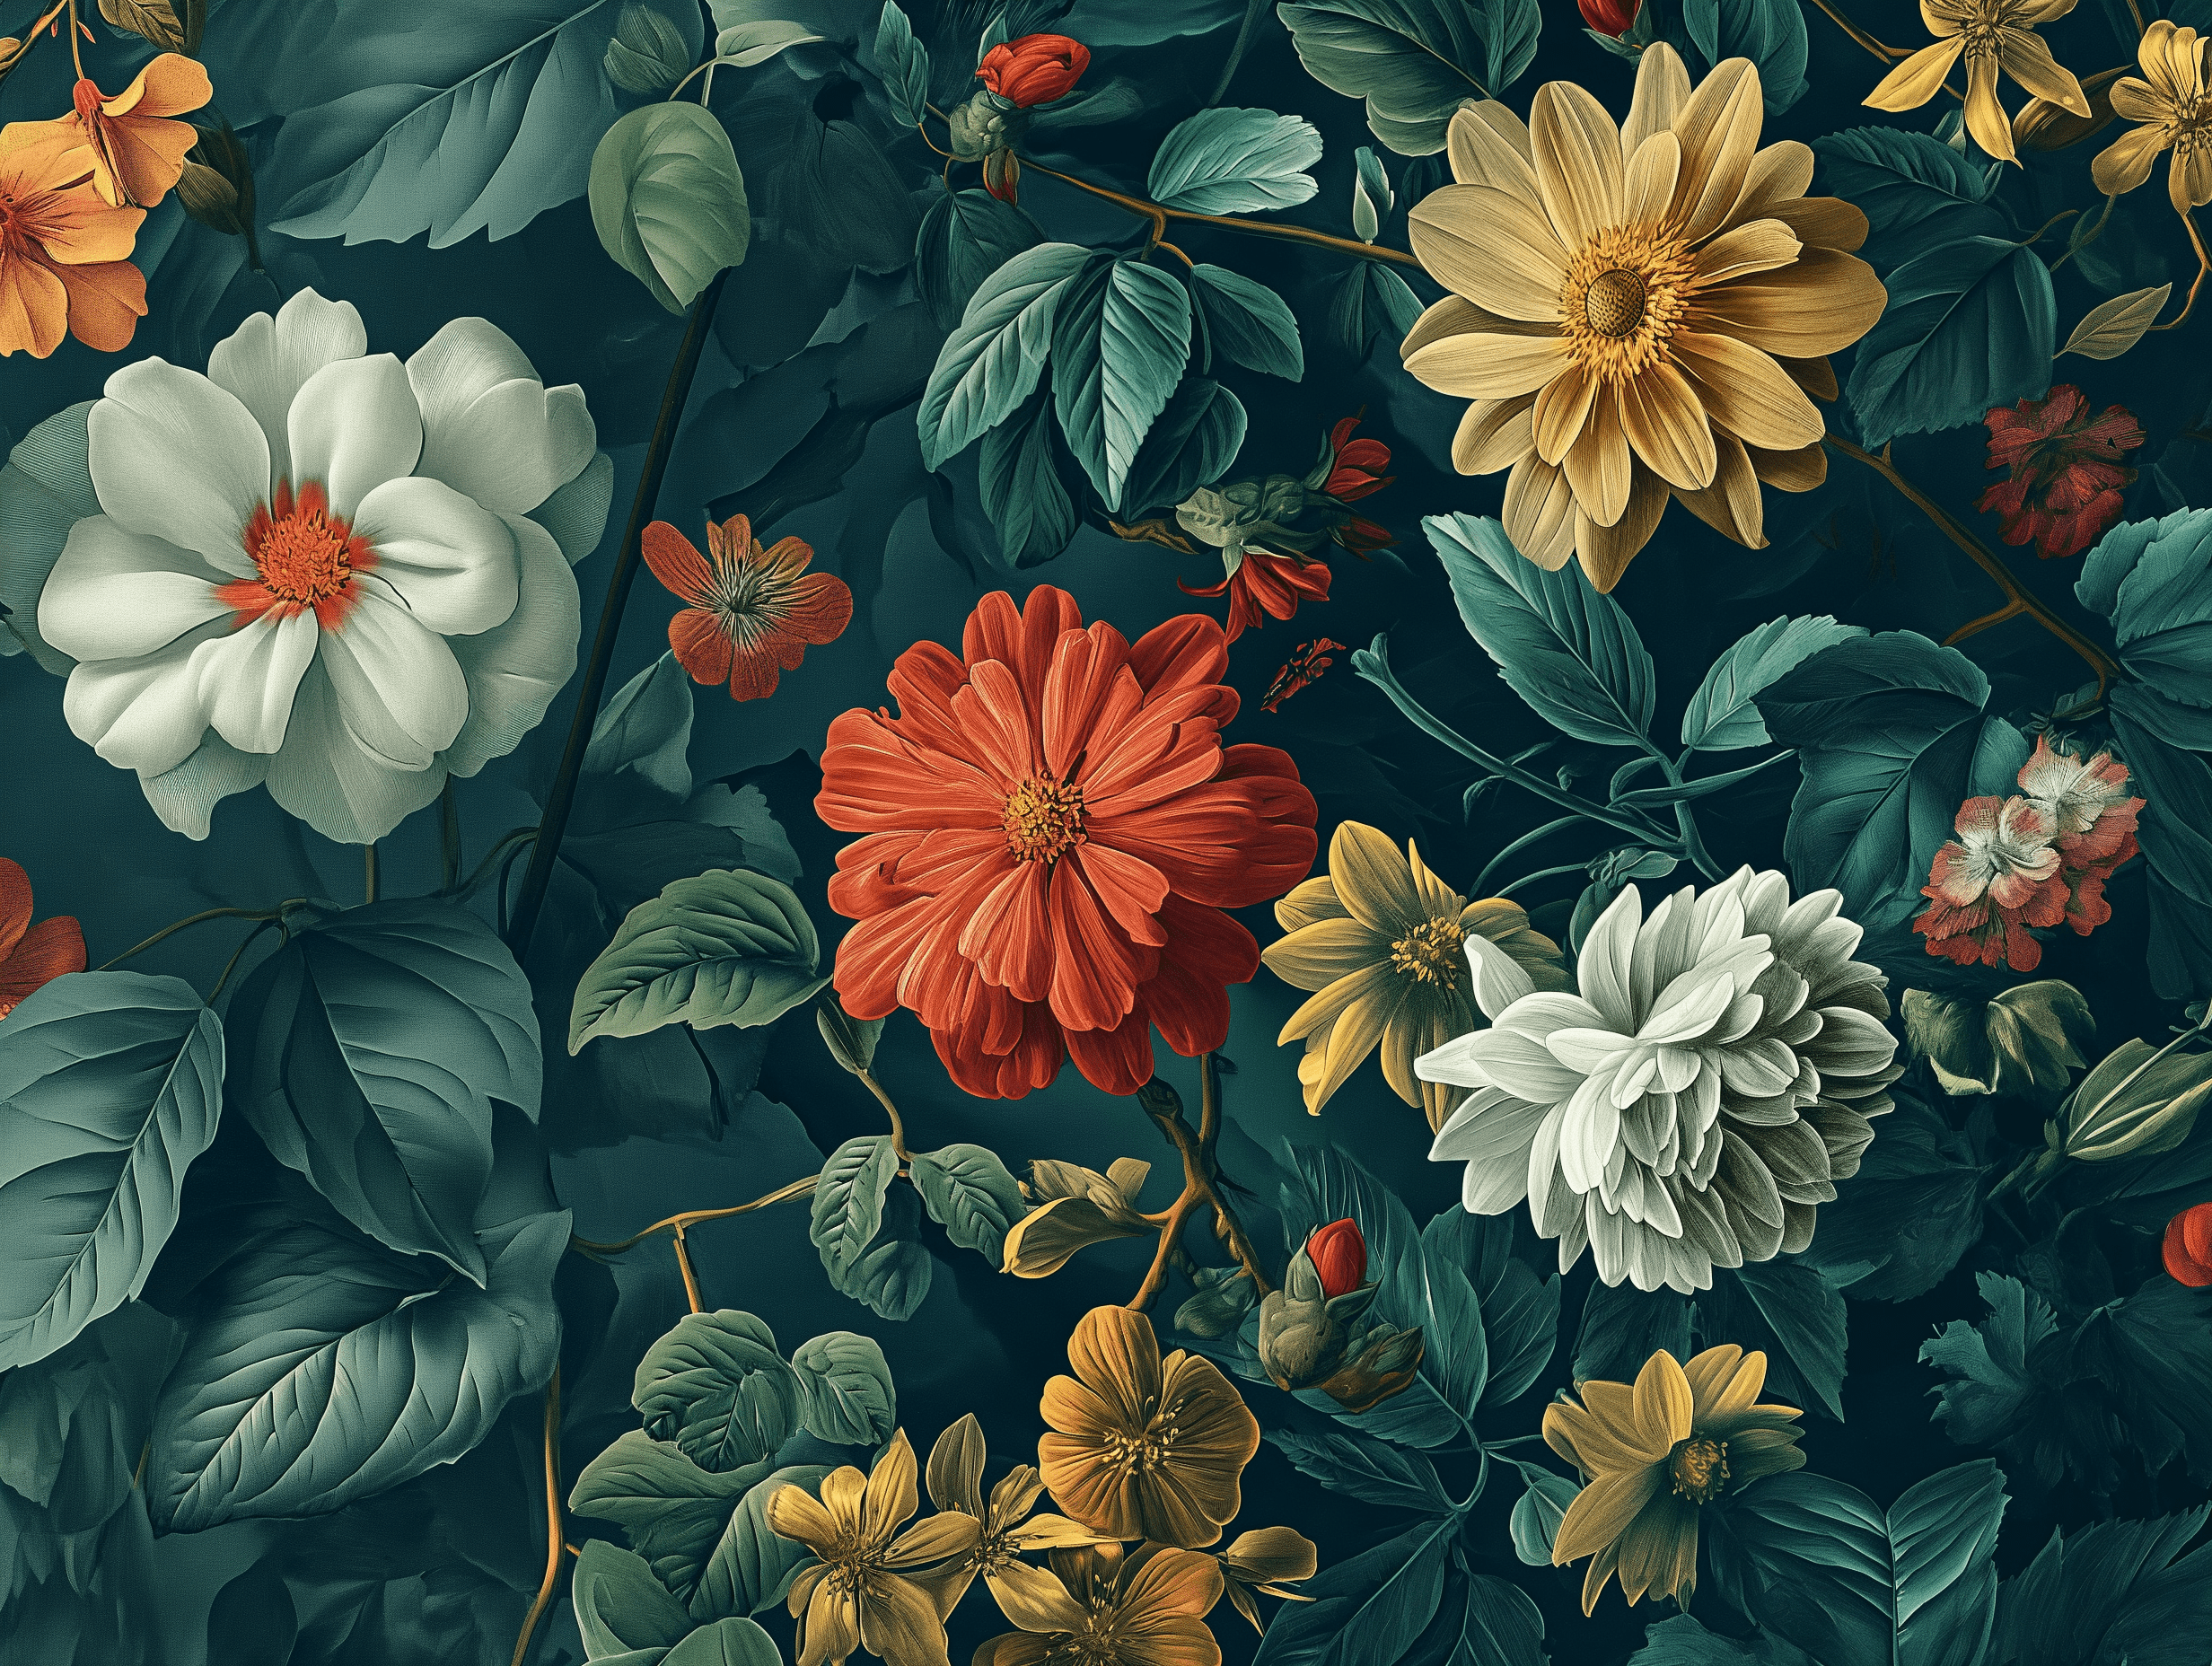 A modern-day wallpaper pattern design blending 19th-century botanical illustrations with modern aesthetics